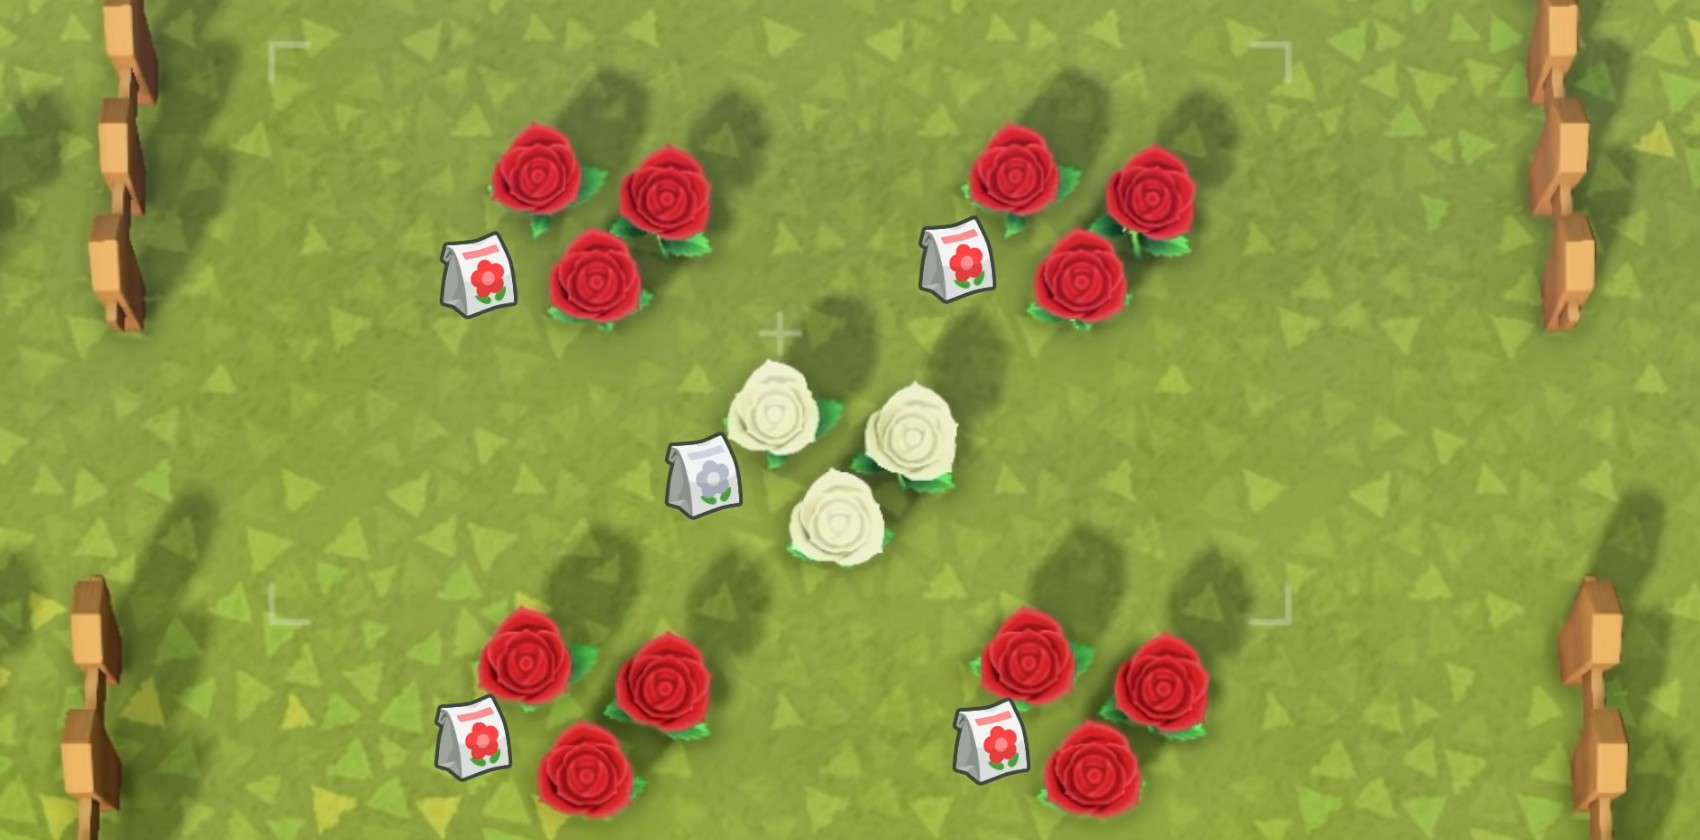 Roses in Animal Crossing New Horizons